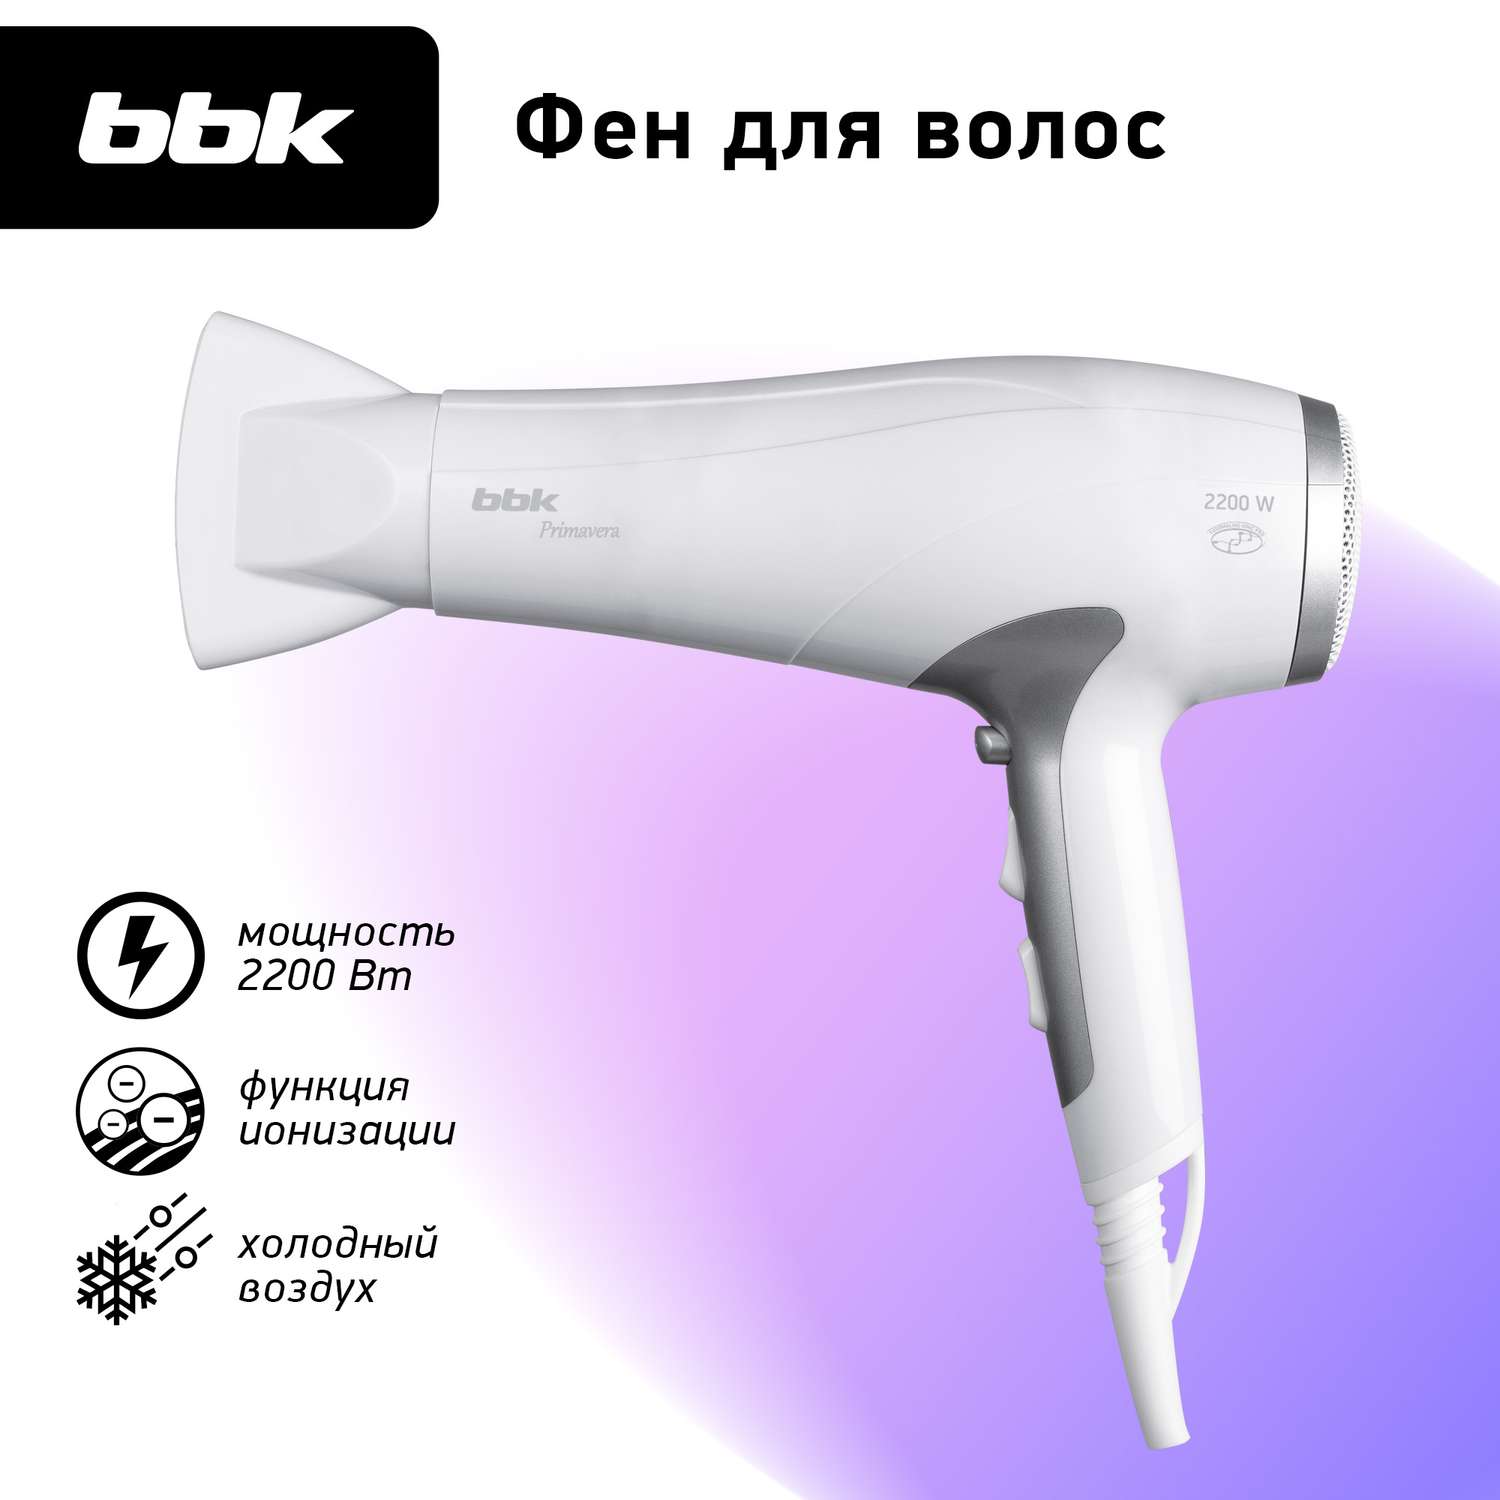 Фен BBK BHD3224i белый/серебро 2 скорости 3 температурных режима - фото 1